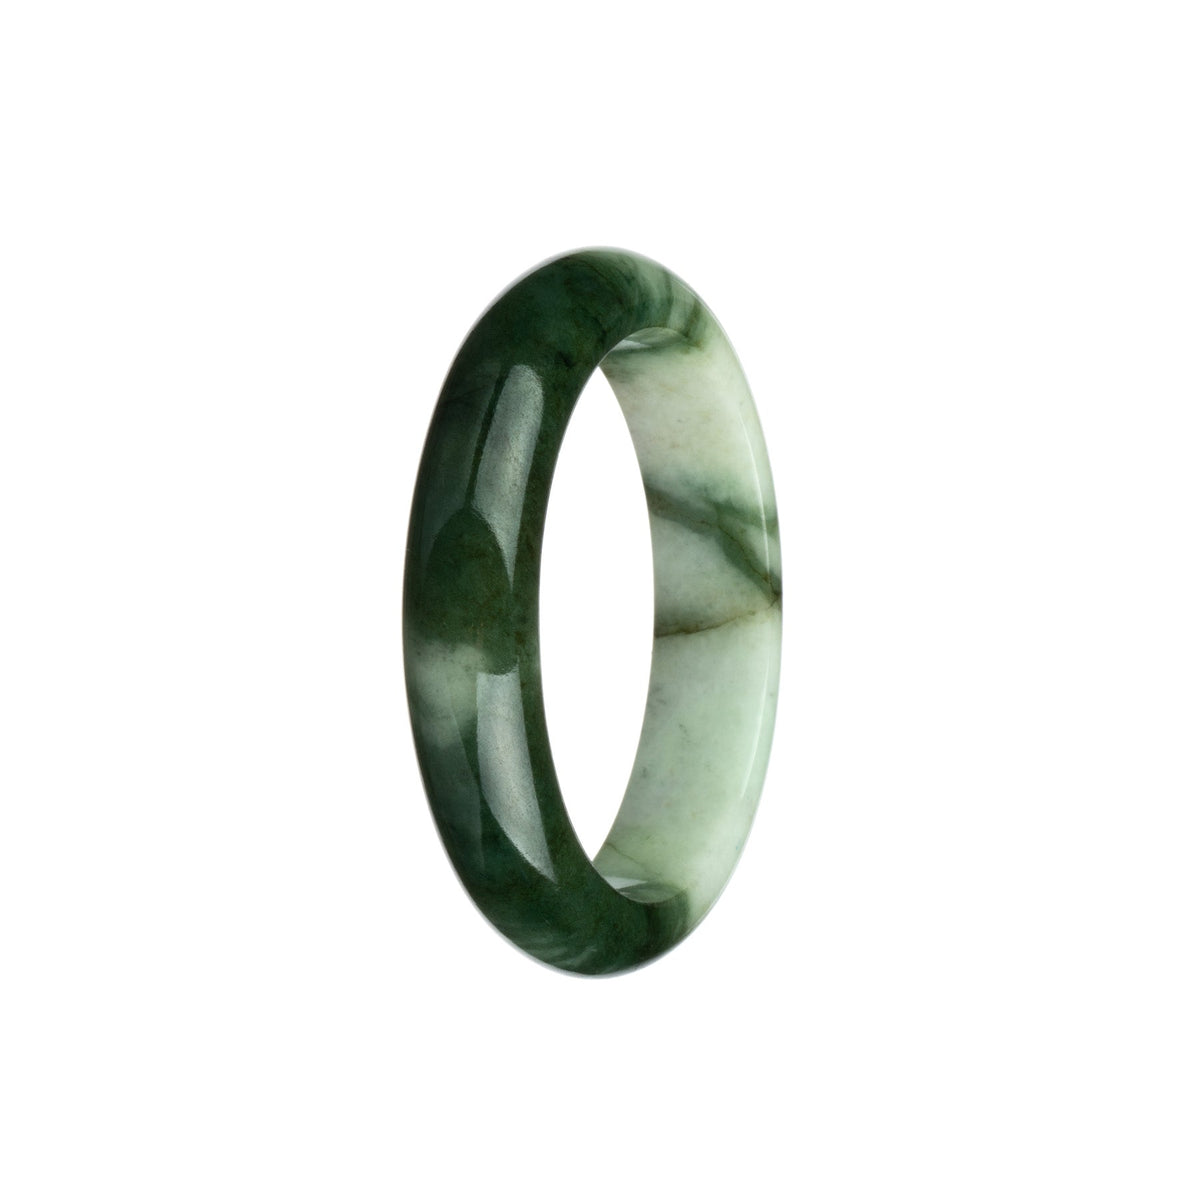 A half moon-shaped bangle bracelet made of genuine olive green and white Burmese jade.